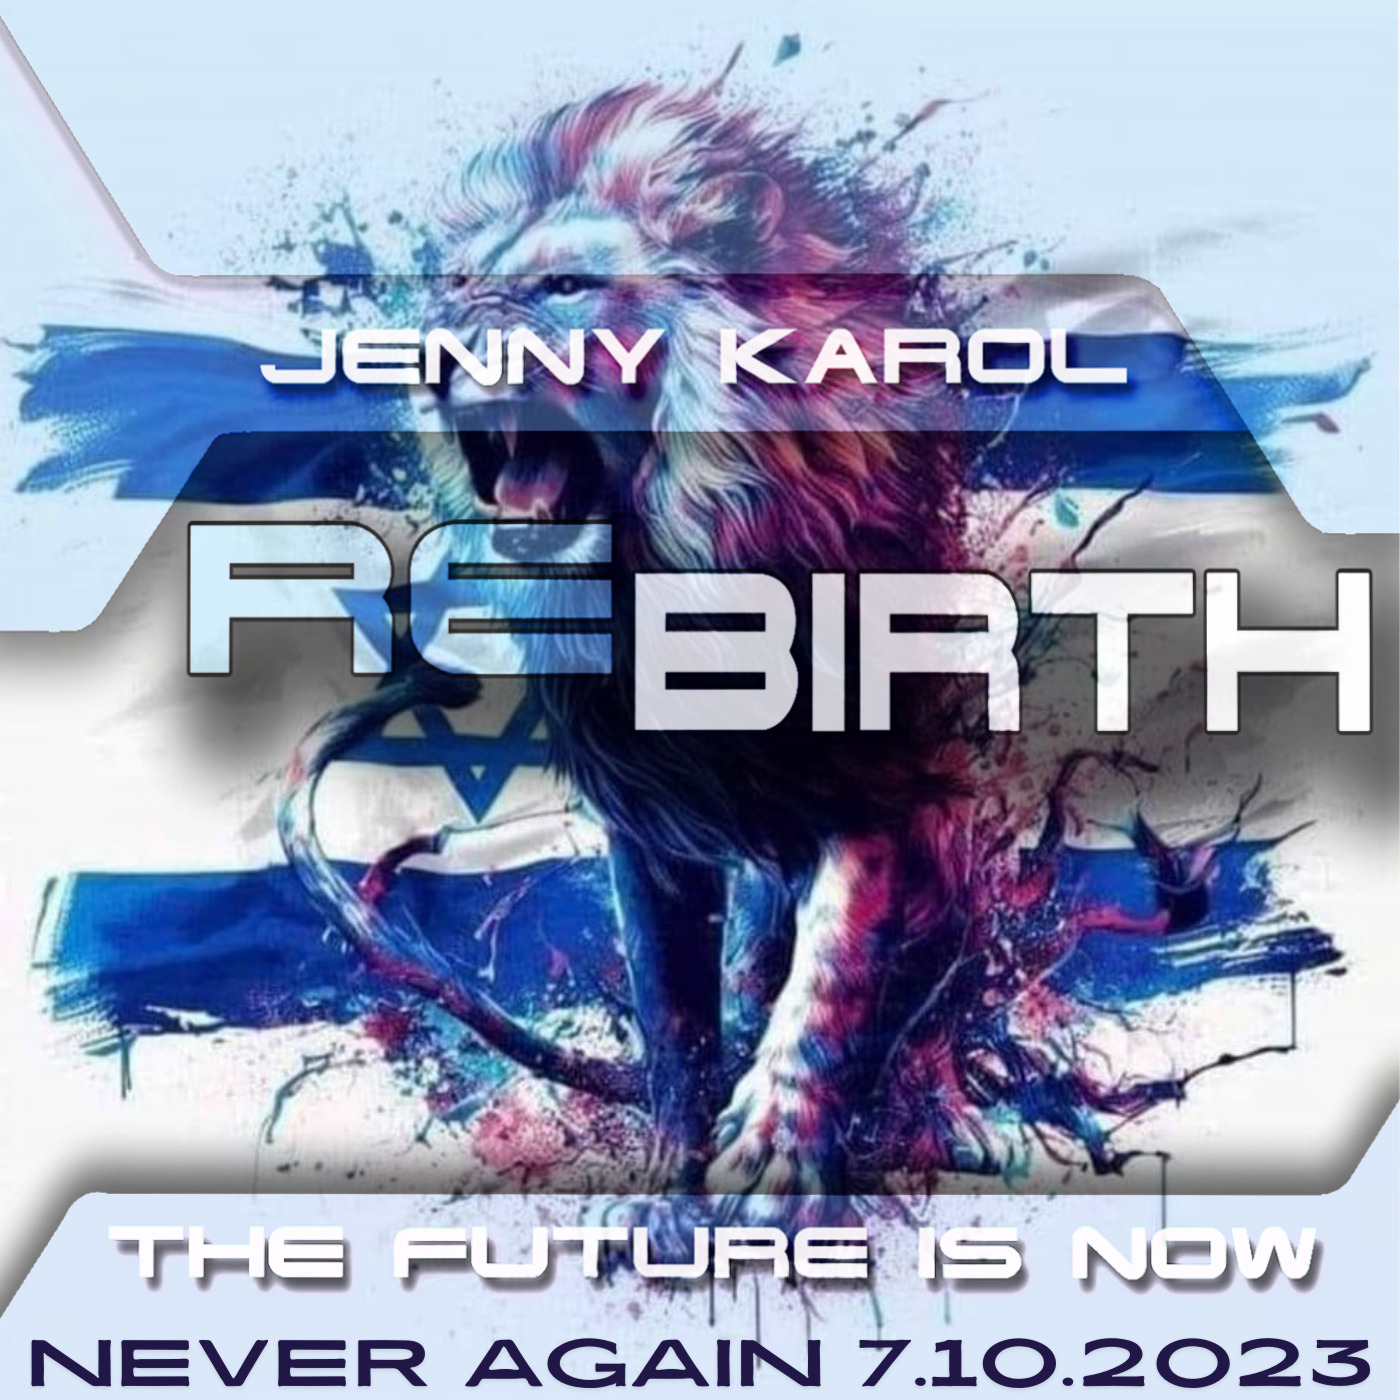 Jenny Karol - ReBirth180 ! NEVER AGAIN 7.10.2023!